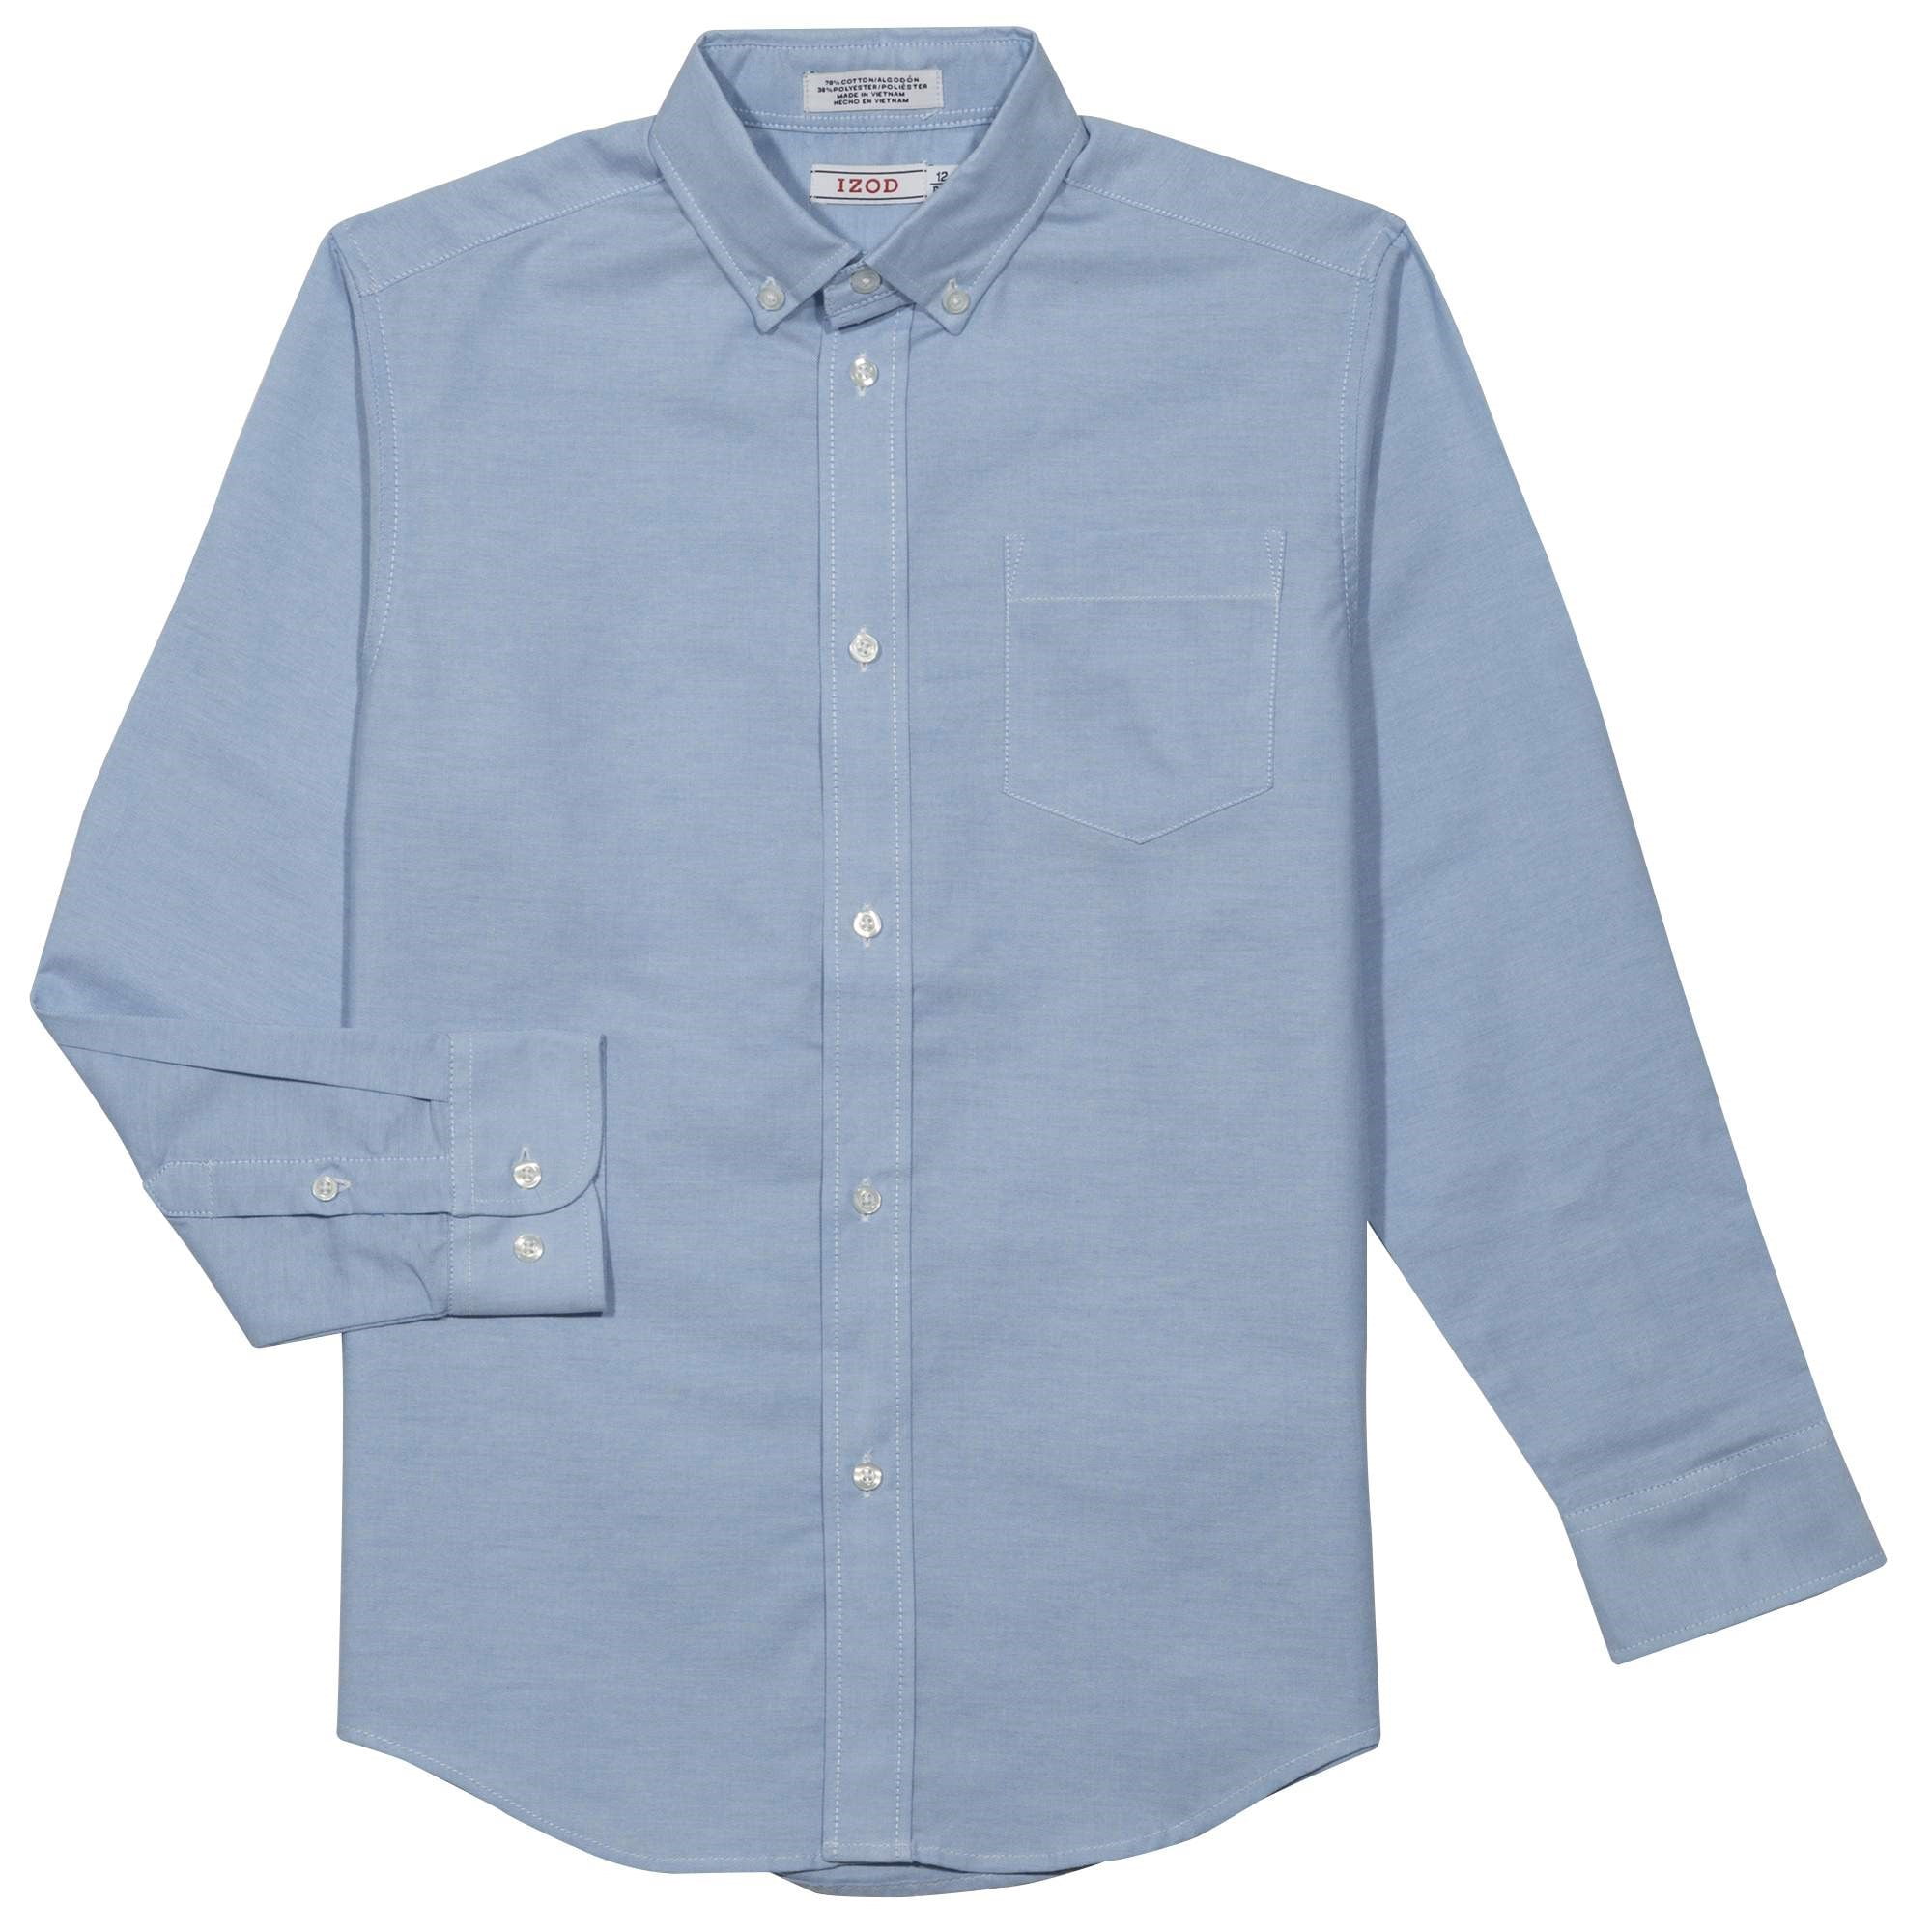 IZOD Boys Long Sleeve Solid Button-Down Oxford Shirt